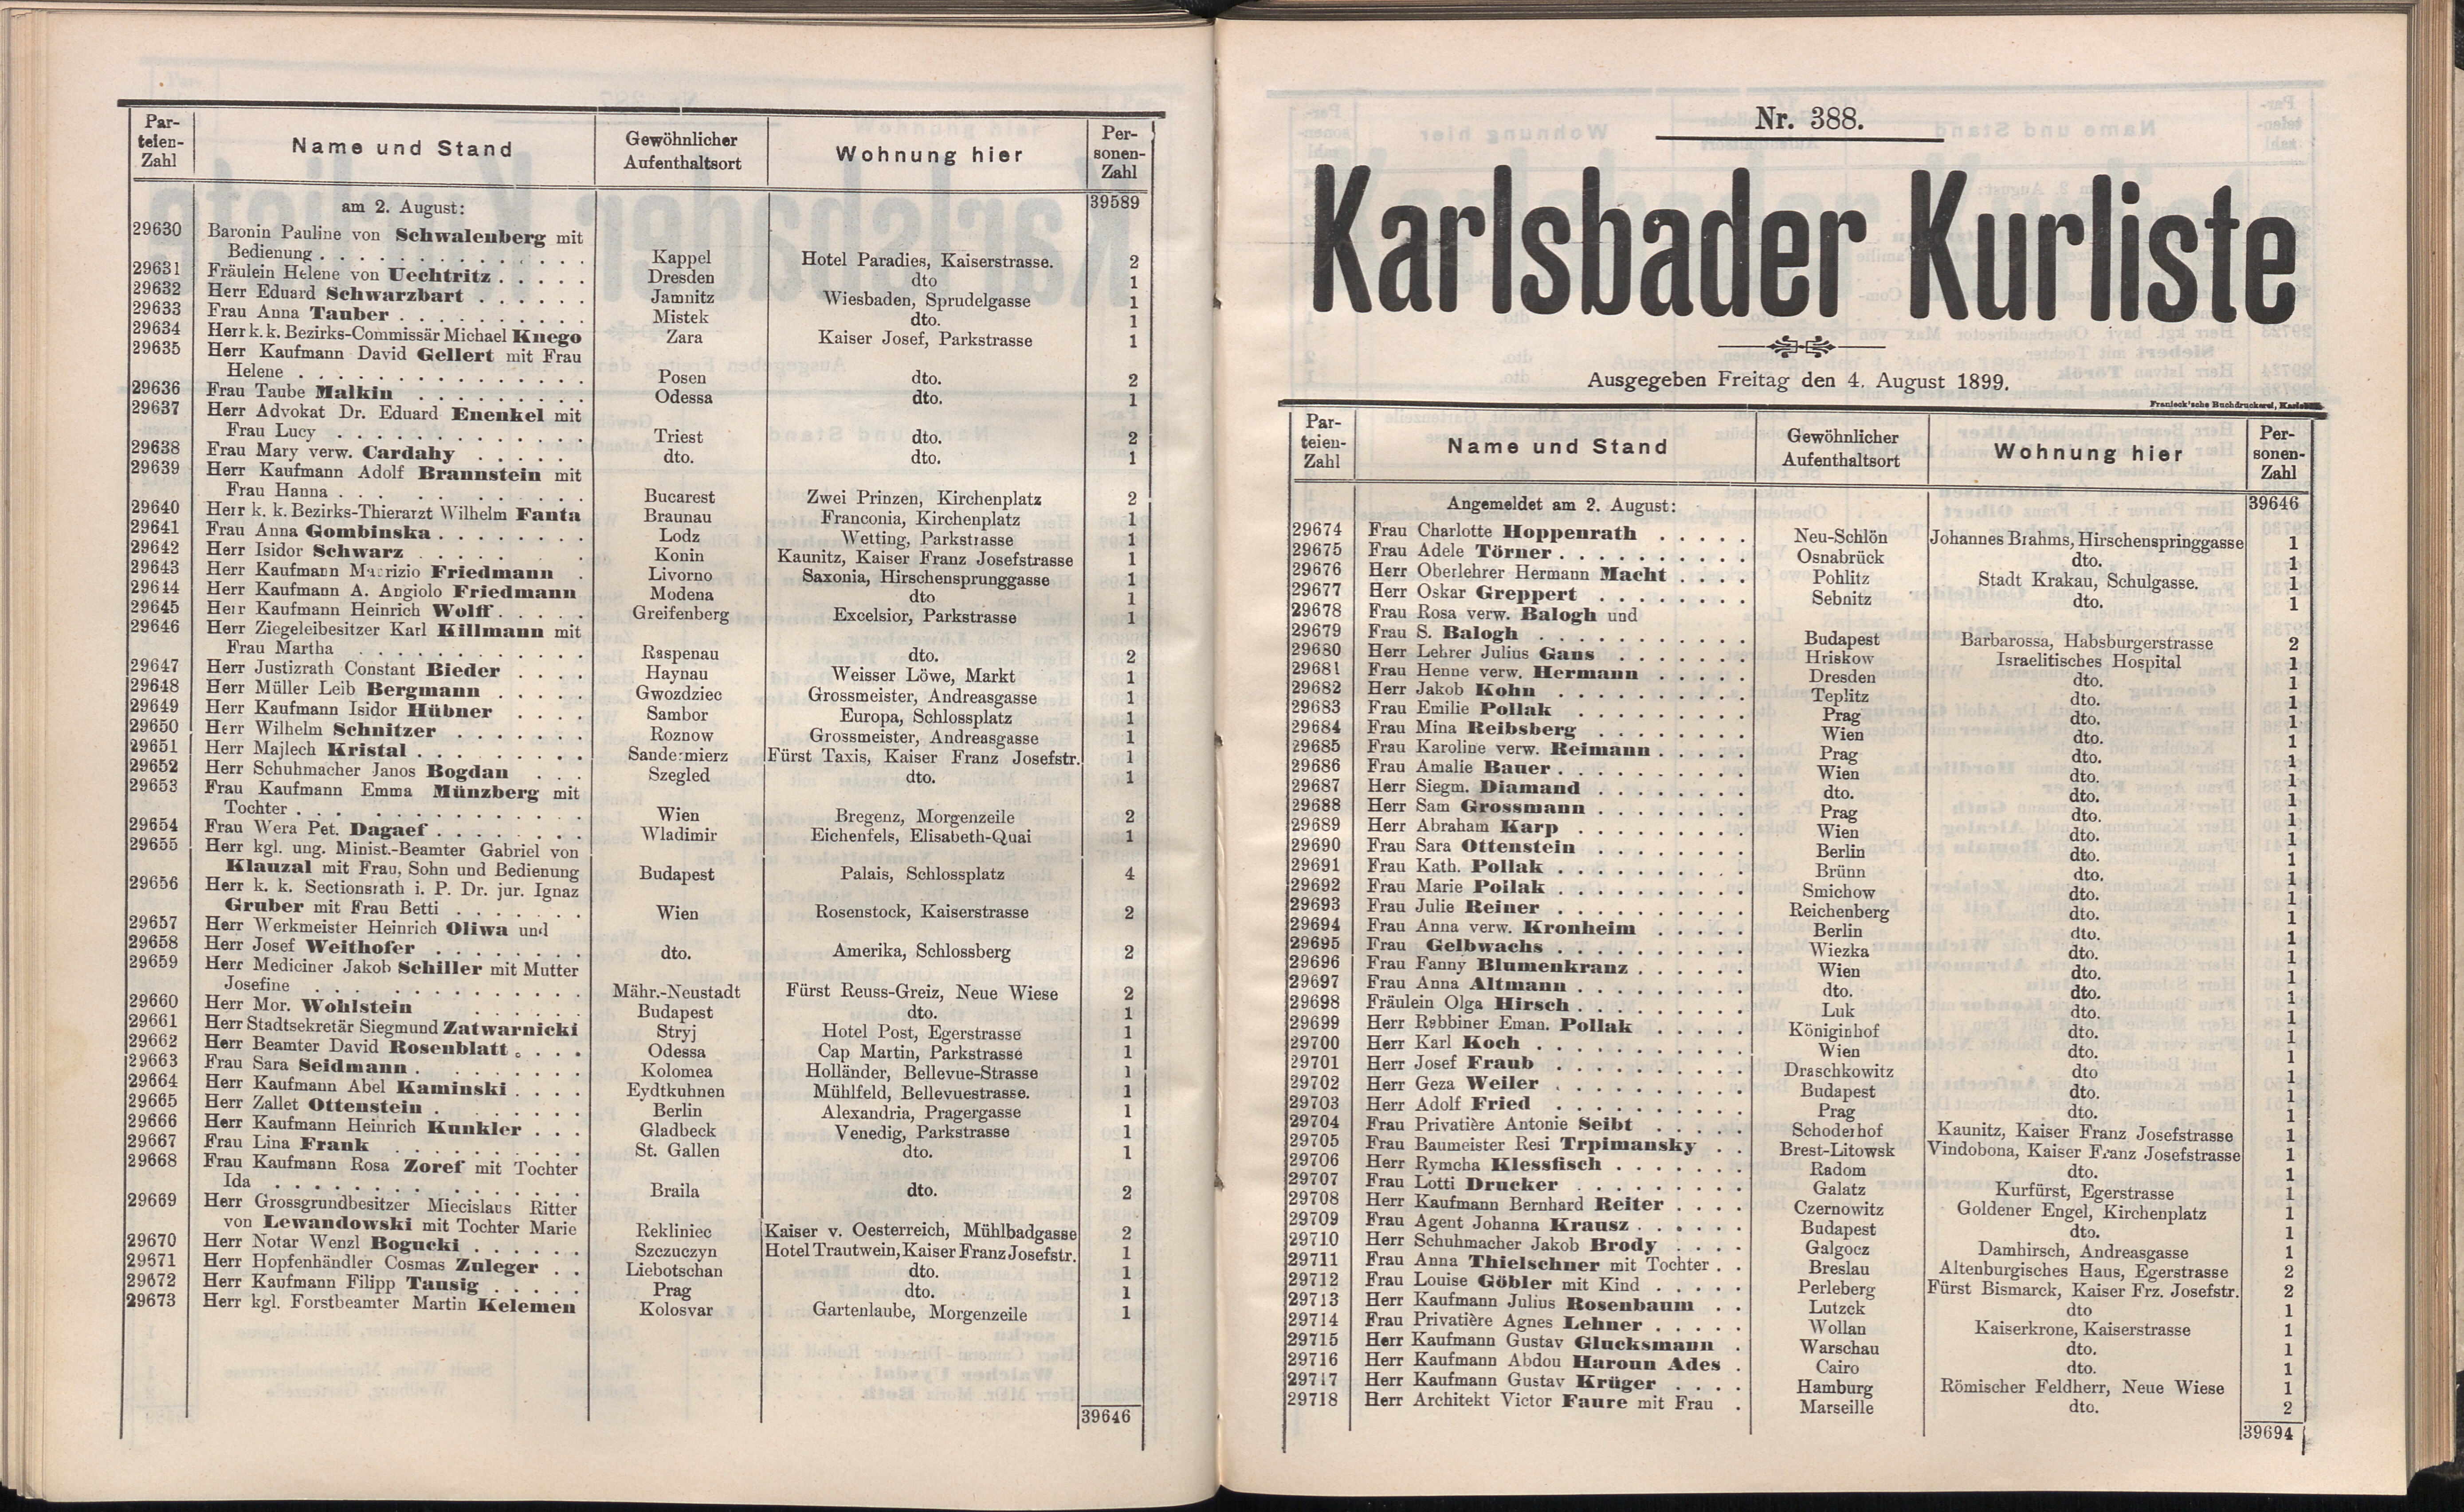 406. soap-kv_knihovna_karlsbader-kurliste-1899_4070